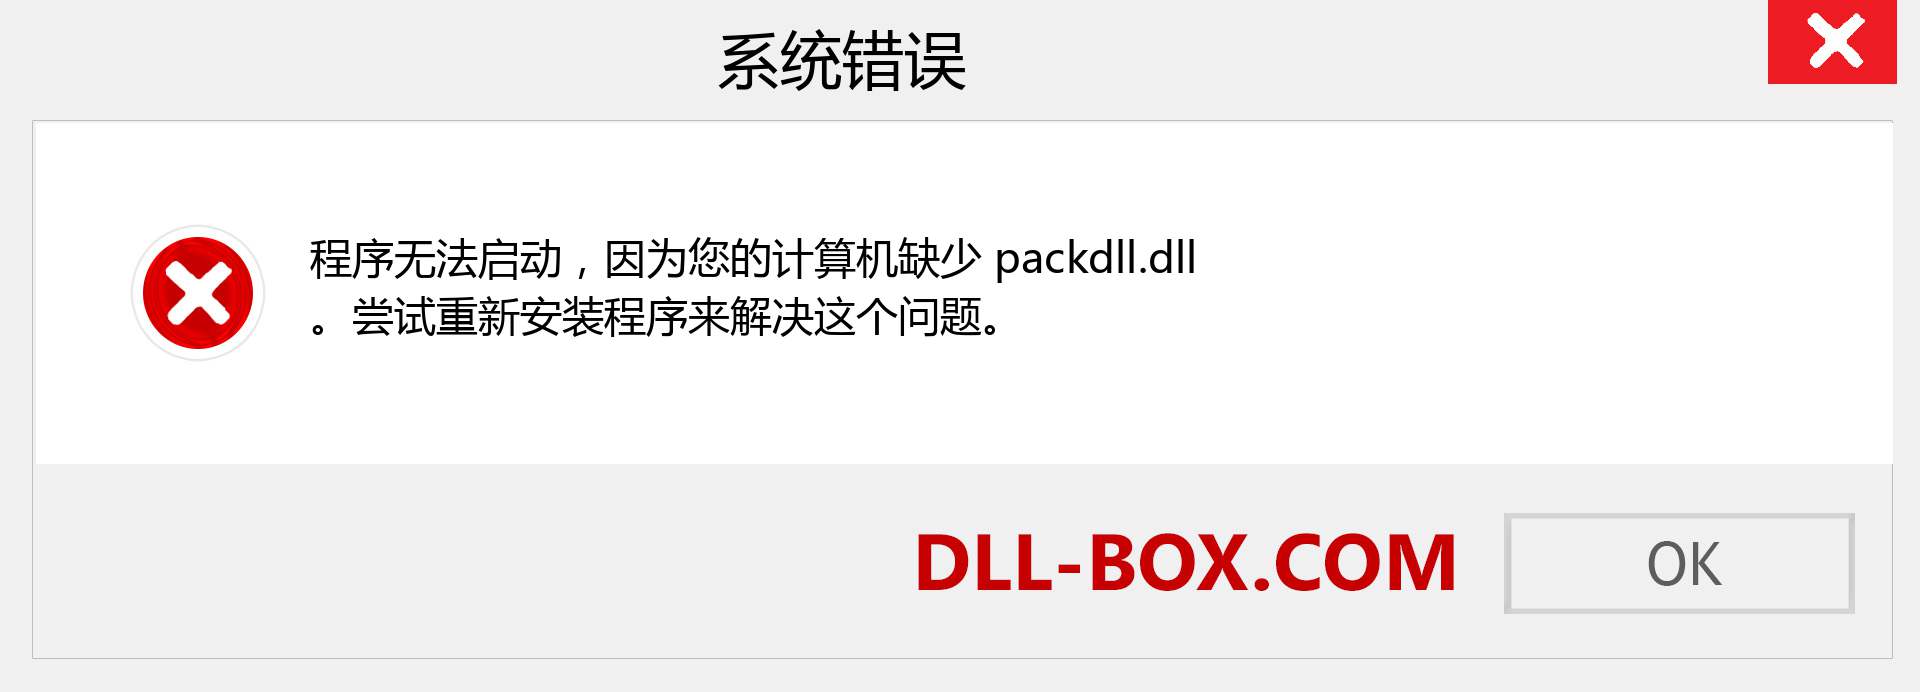 packdll.dll 文件丢失？。 适用于 Windows 7、8、10 的下载 - 修复 Windows、照片、图像上的 packdll dll 丢失错误